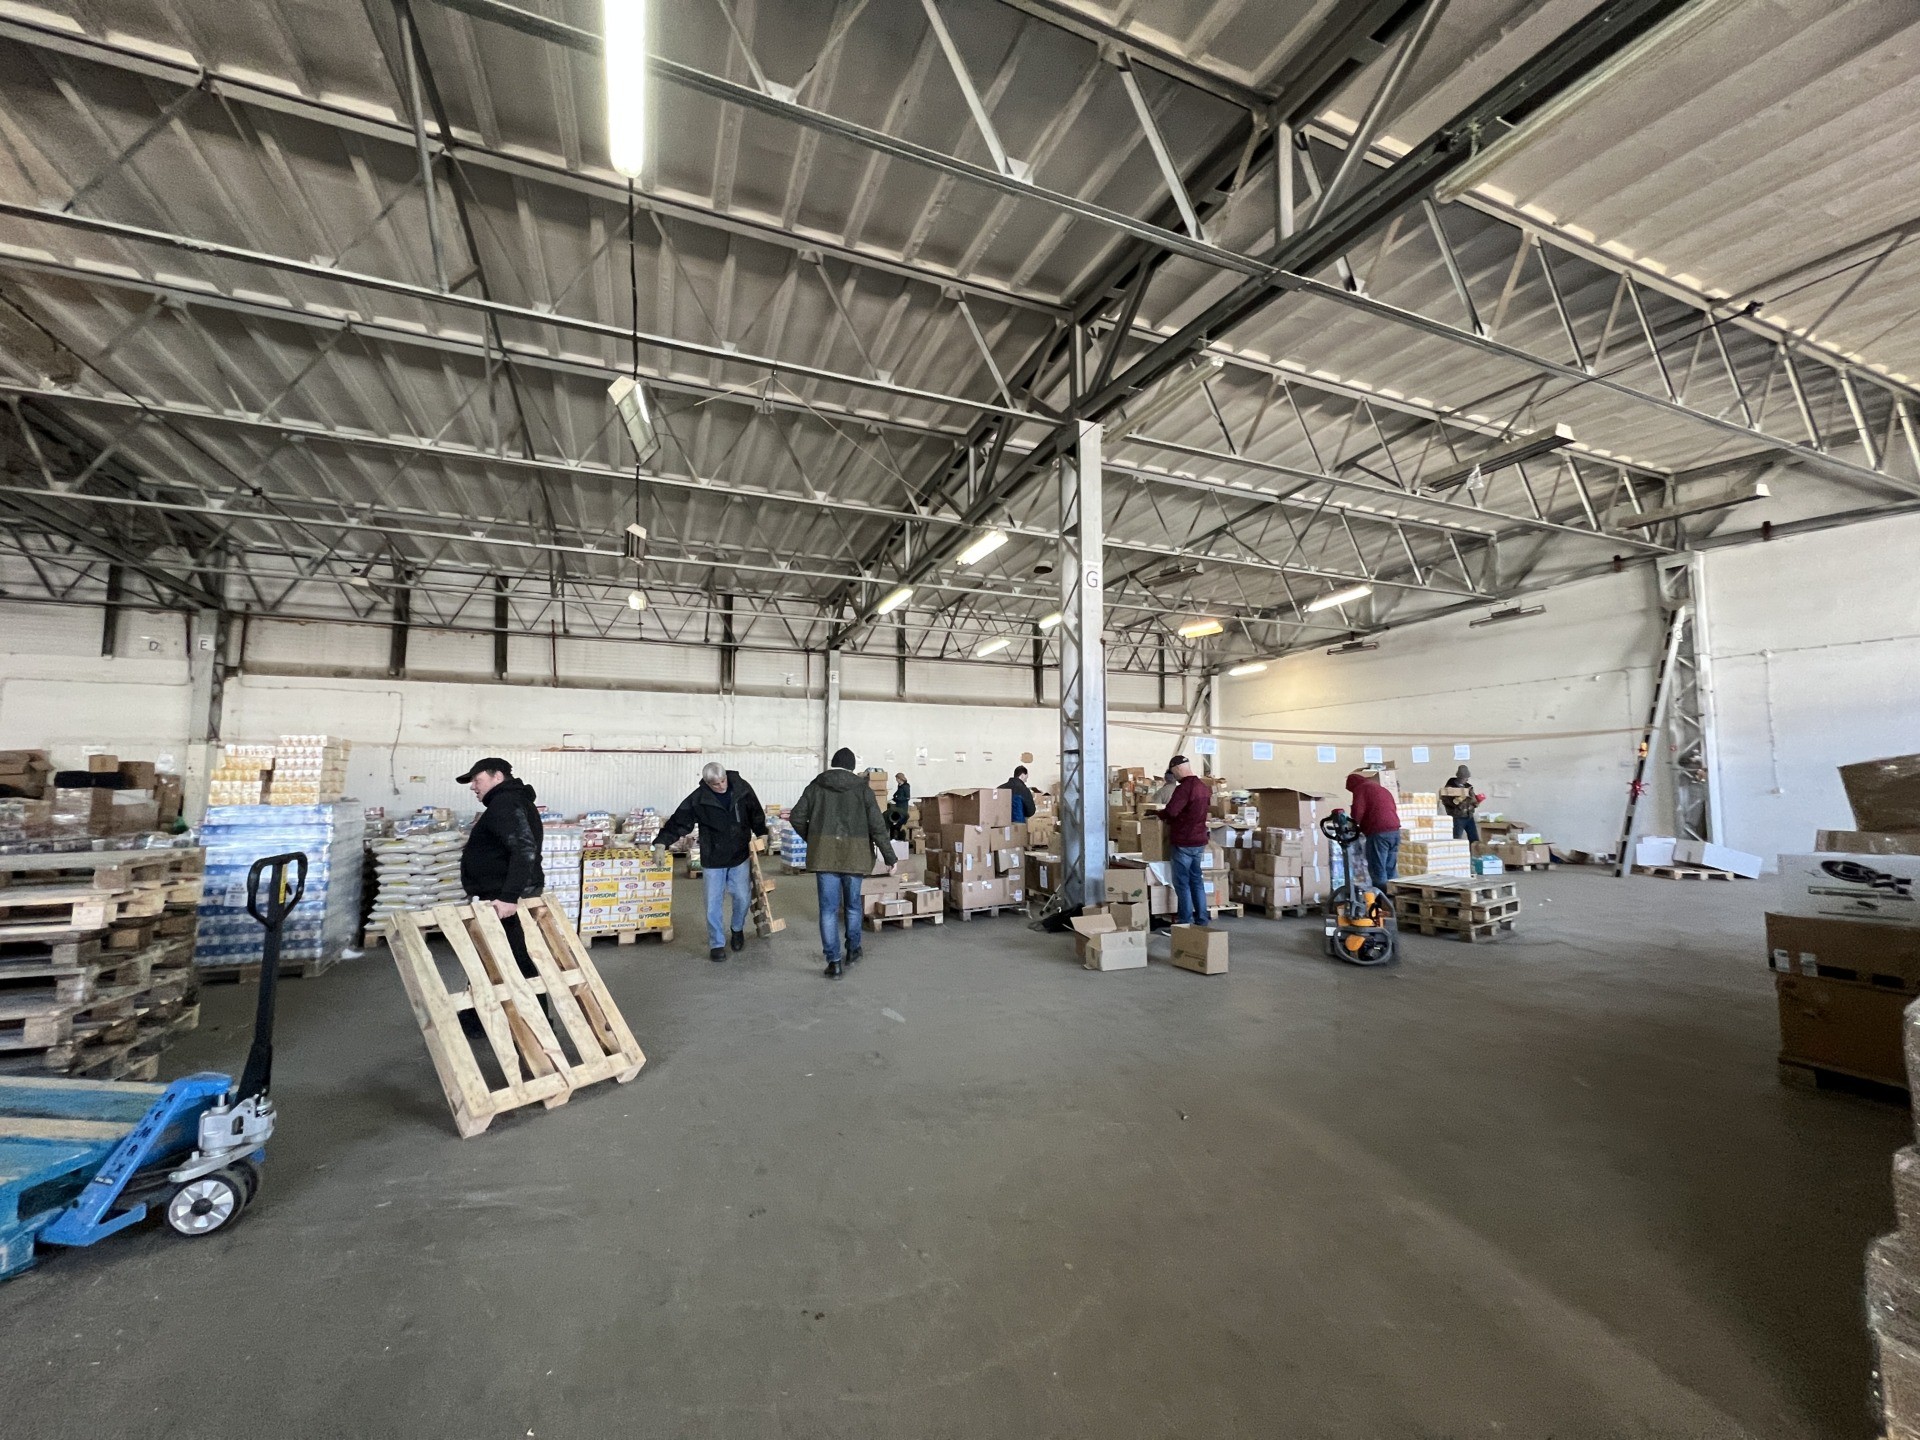 Volunteers in the warehouse. (Kristina Wong/Breitbart News)